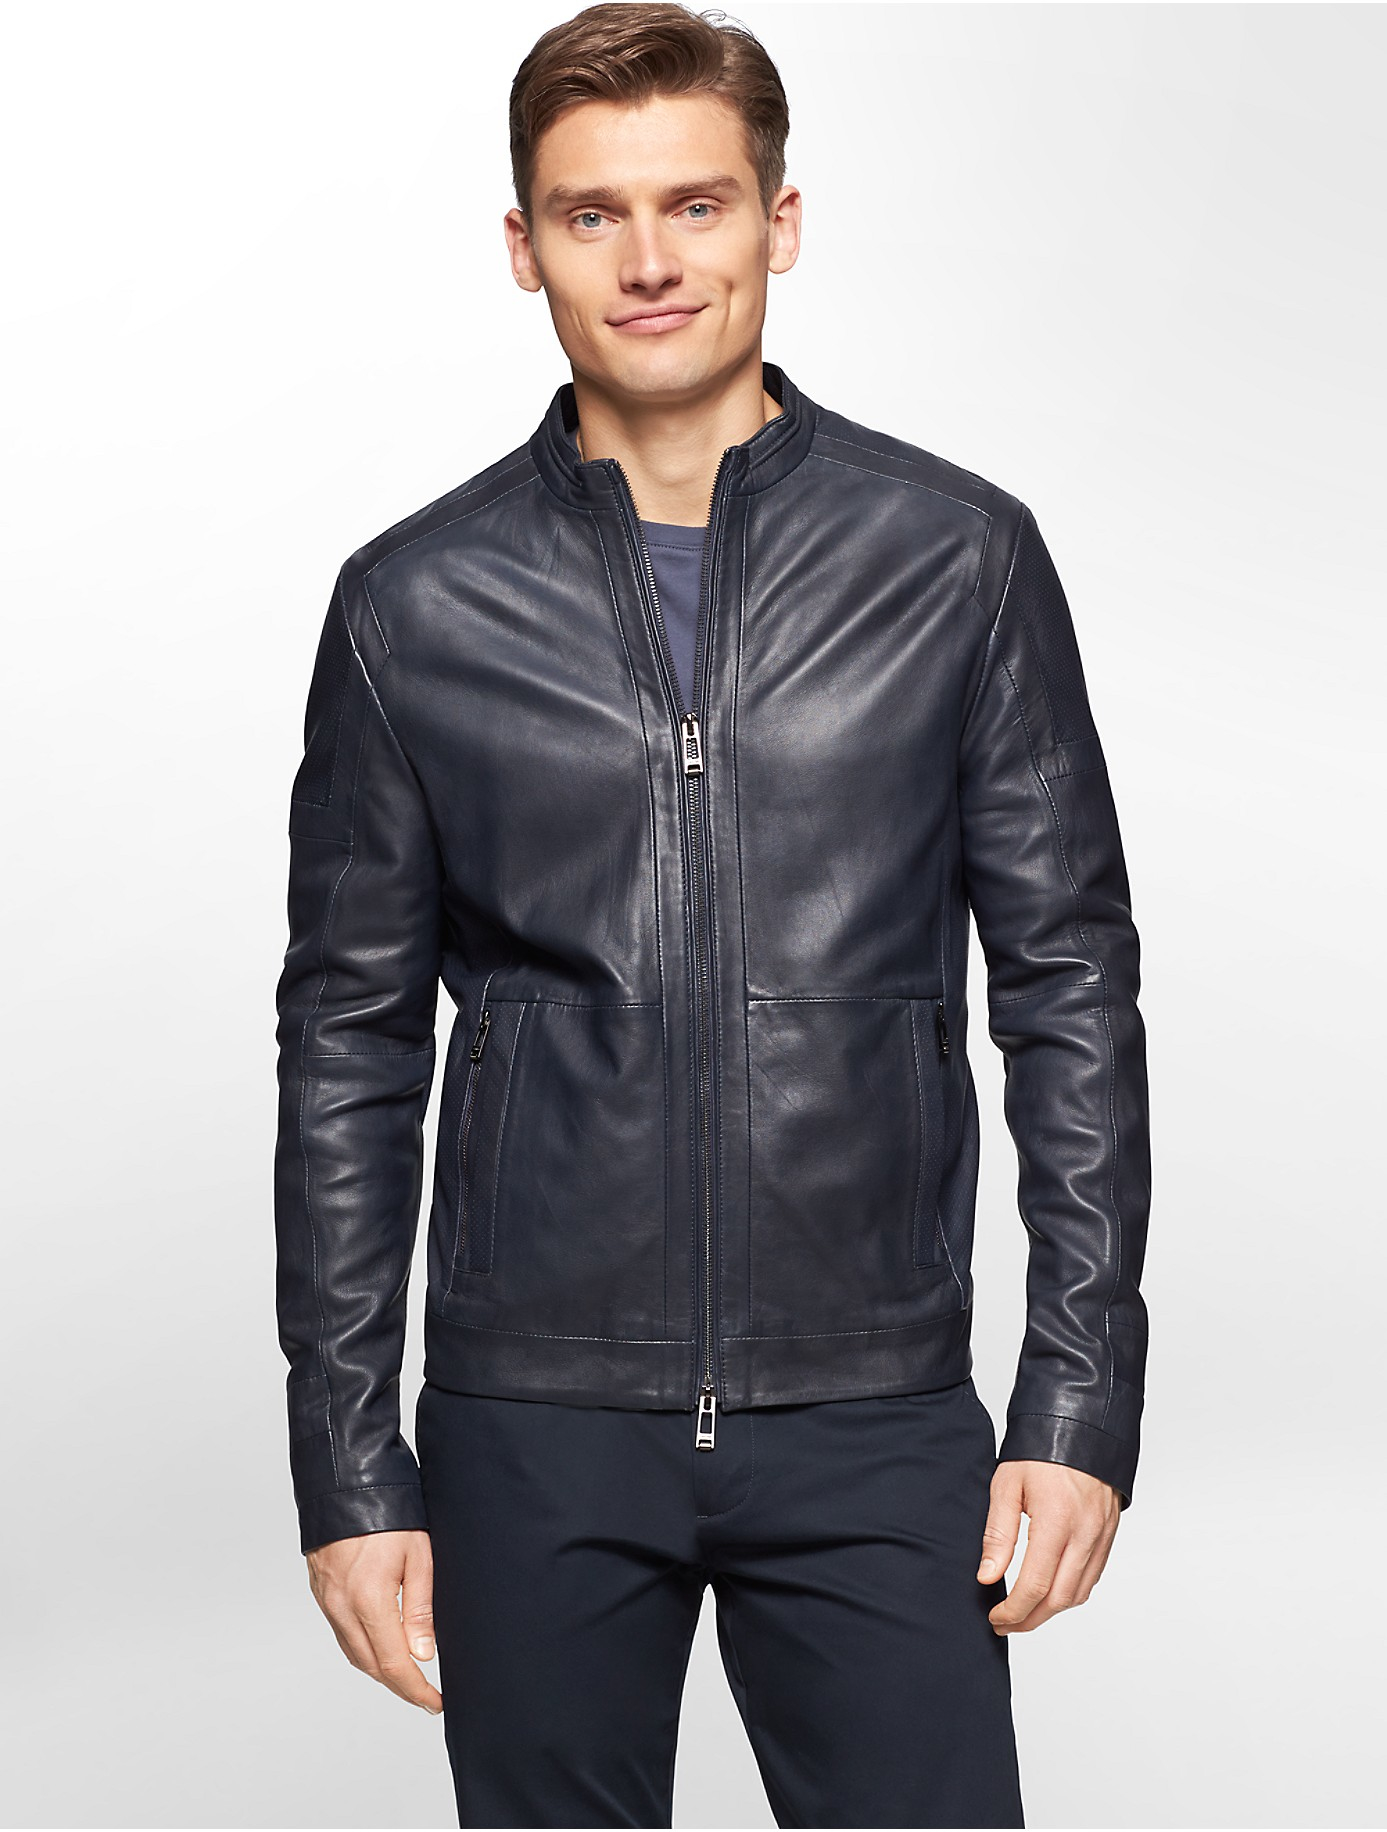 laser elegant Voorrecht calvin klein blue leather jacket, Off 66%, www.iusarecords.com